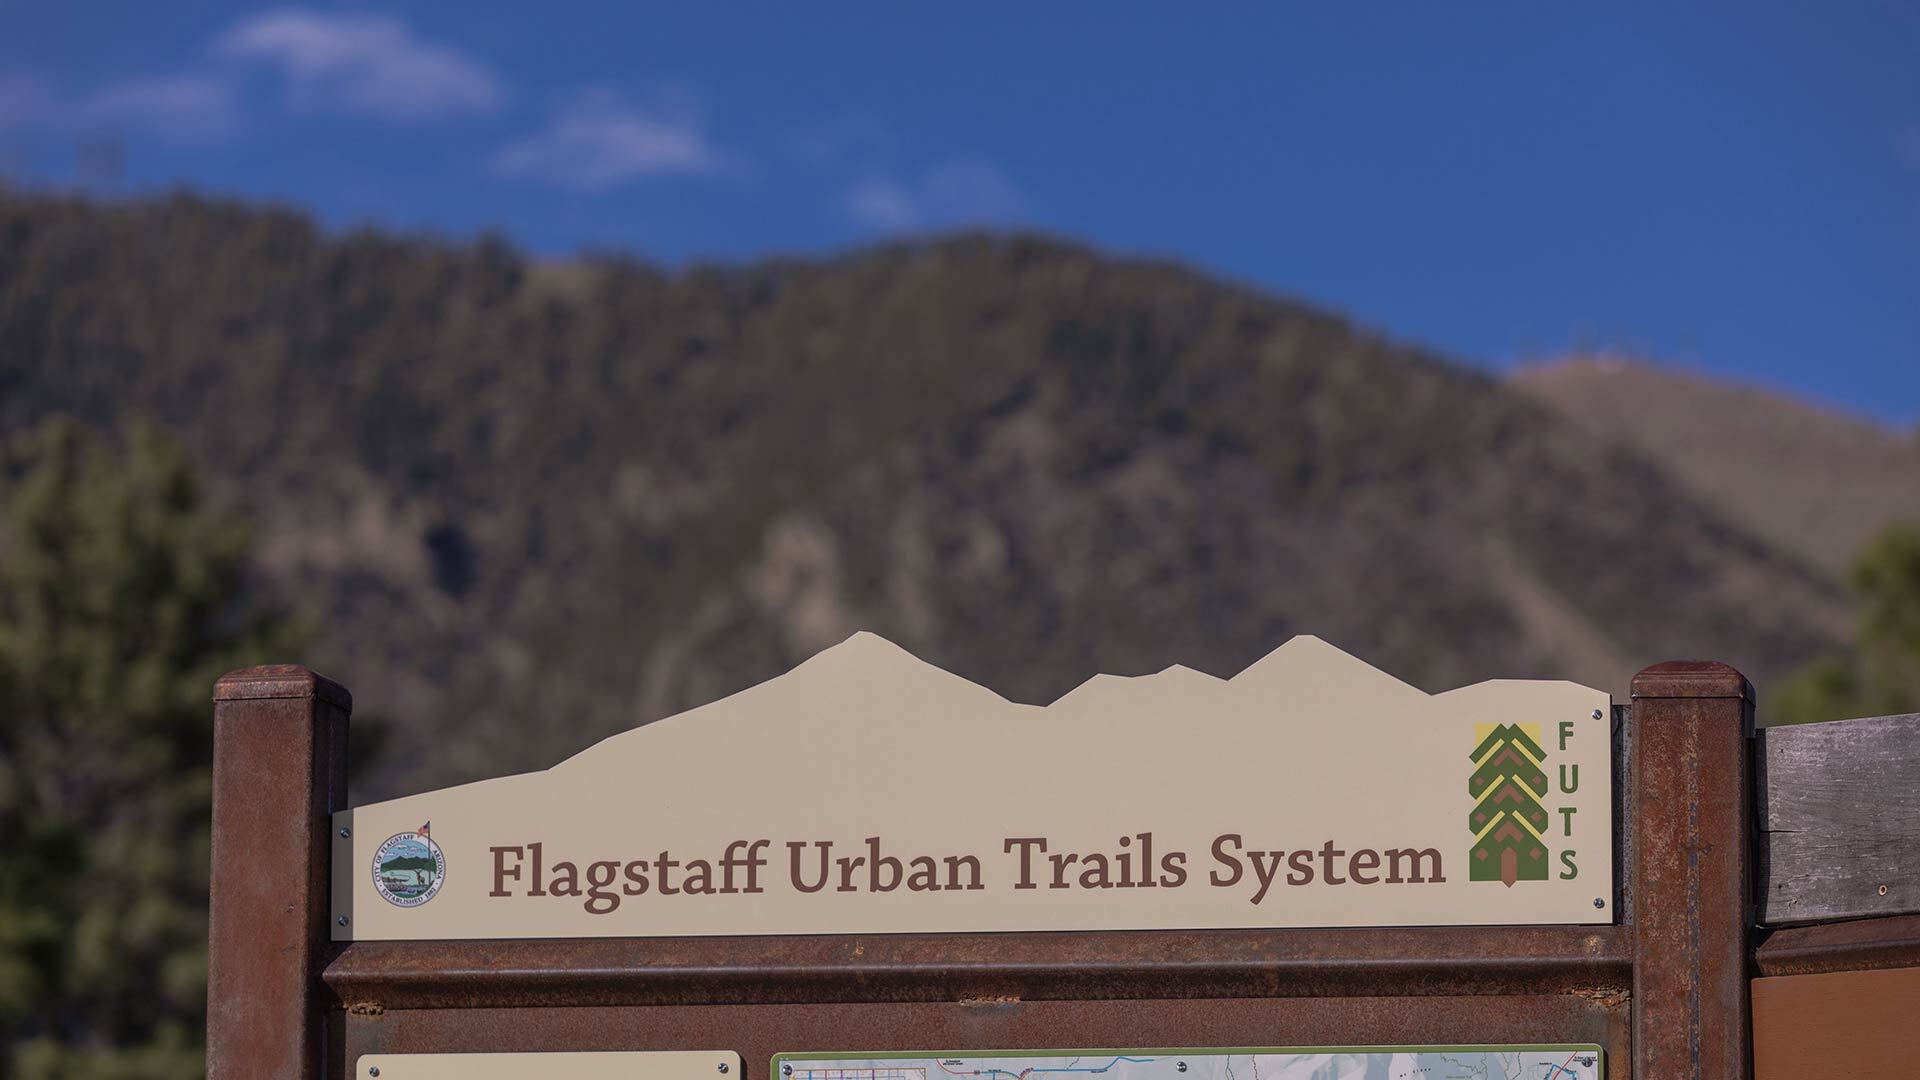 Vlm flagstaff trail system sign